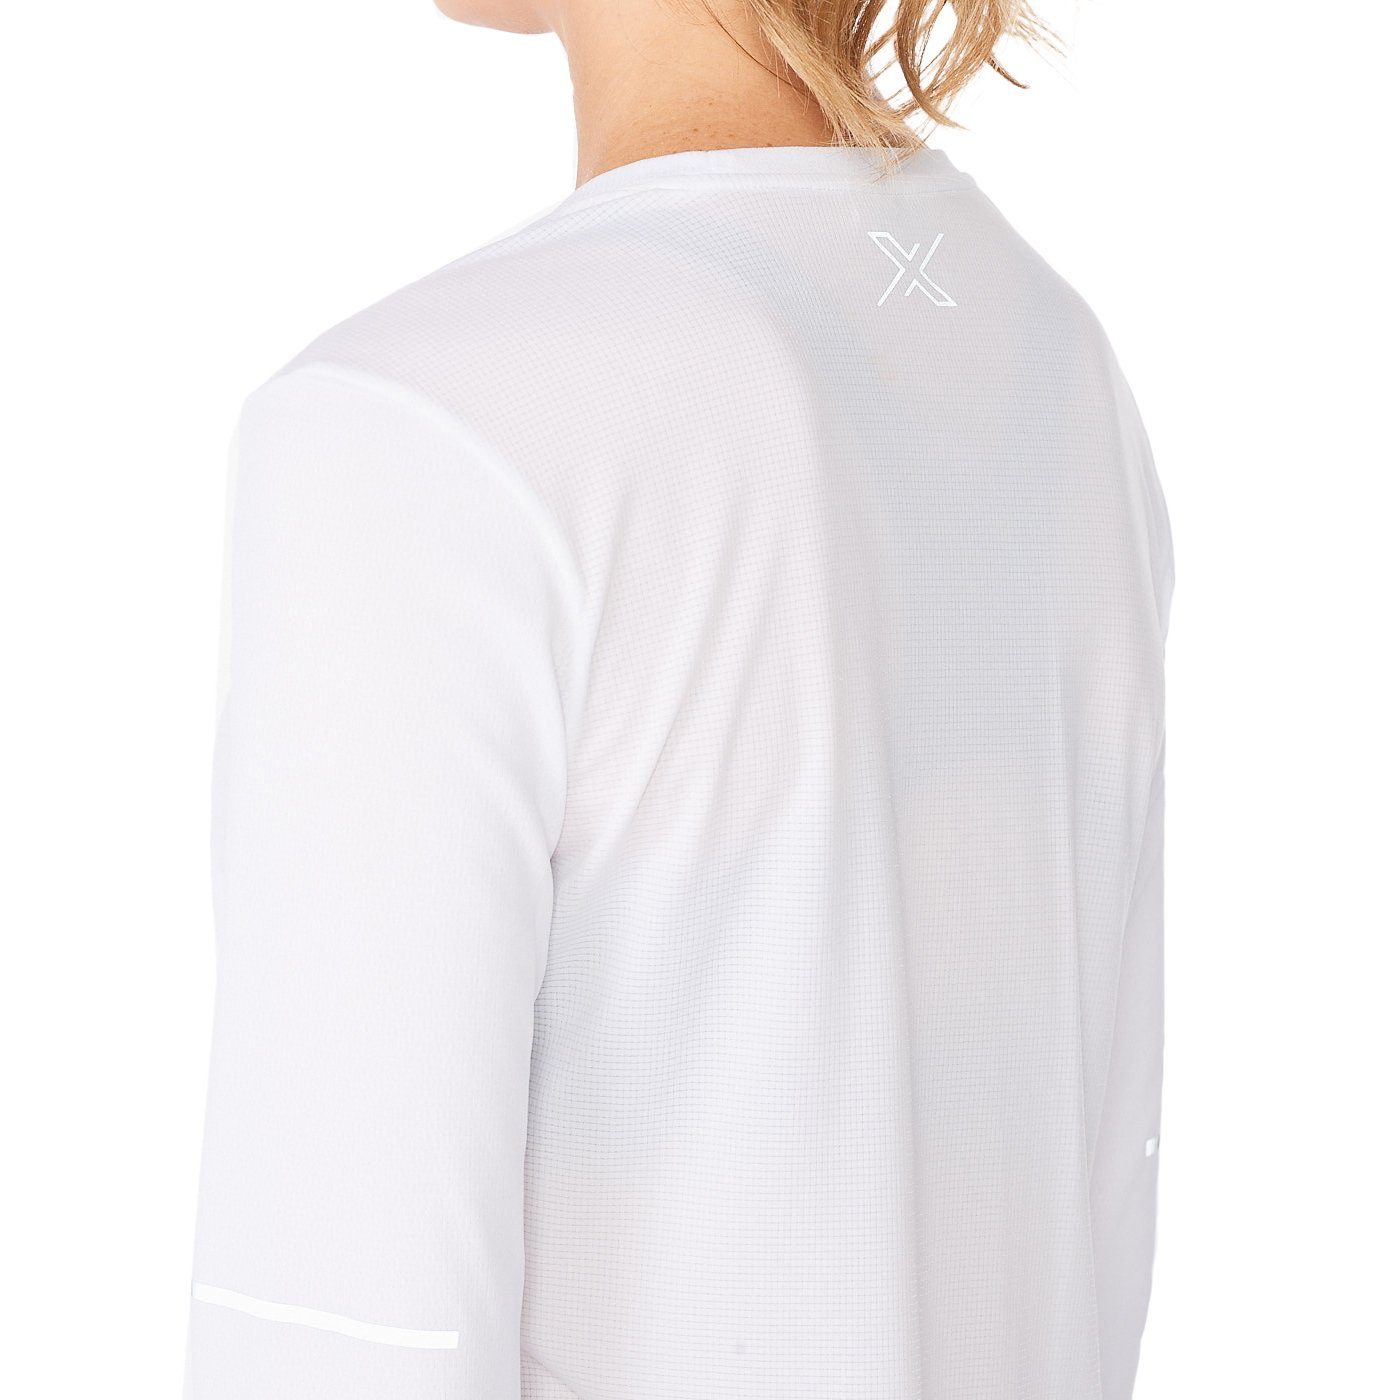 / Logos Aero / Laufshirt Reflective ultra Technologie Longsleeve Reflektierende  X-VENT leicht 2xU White/Silver